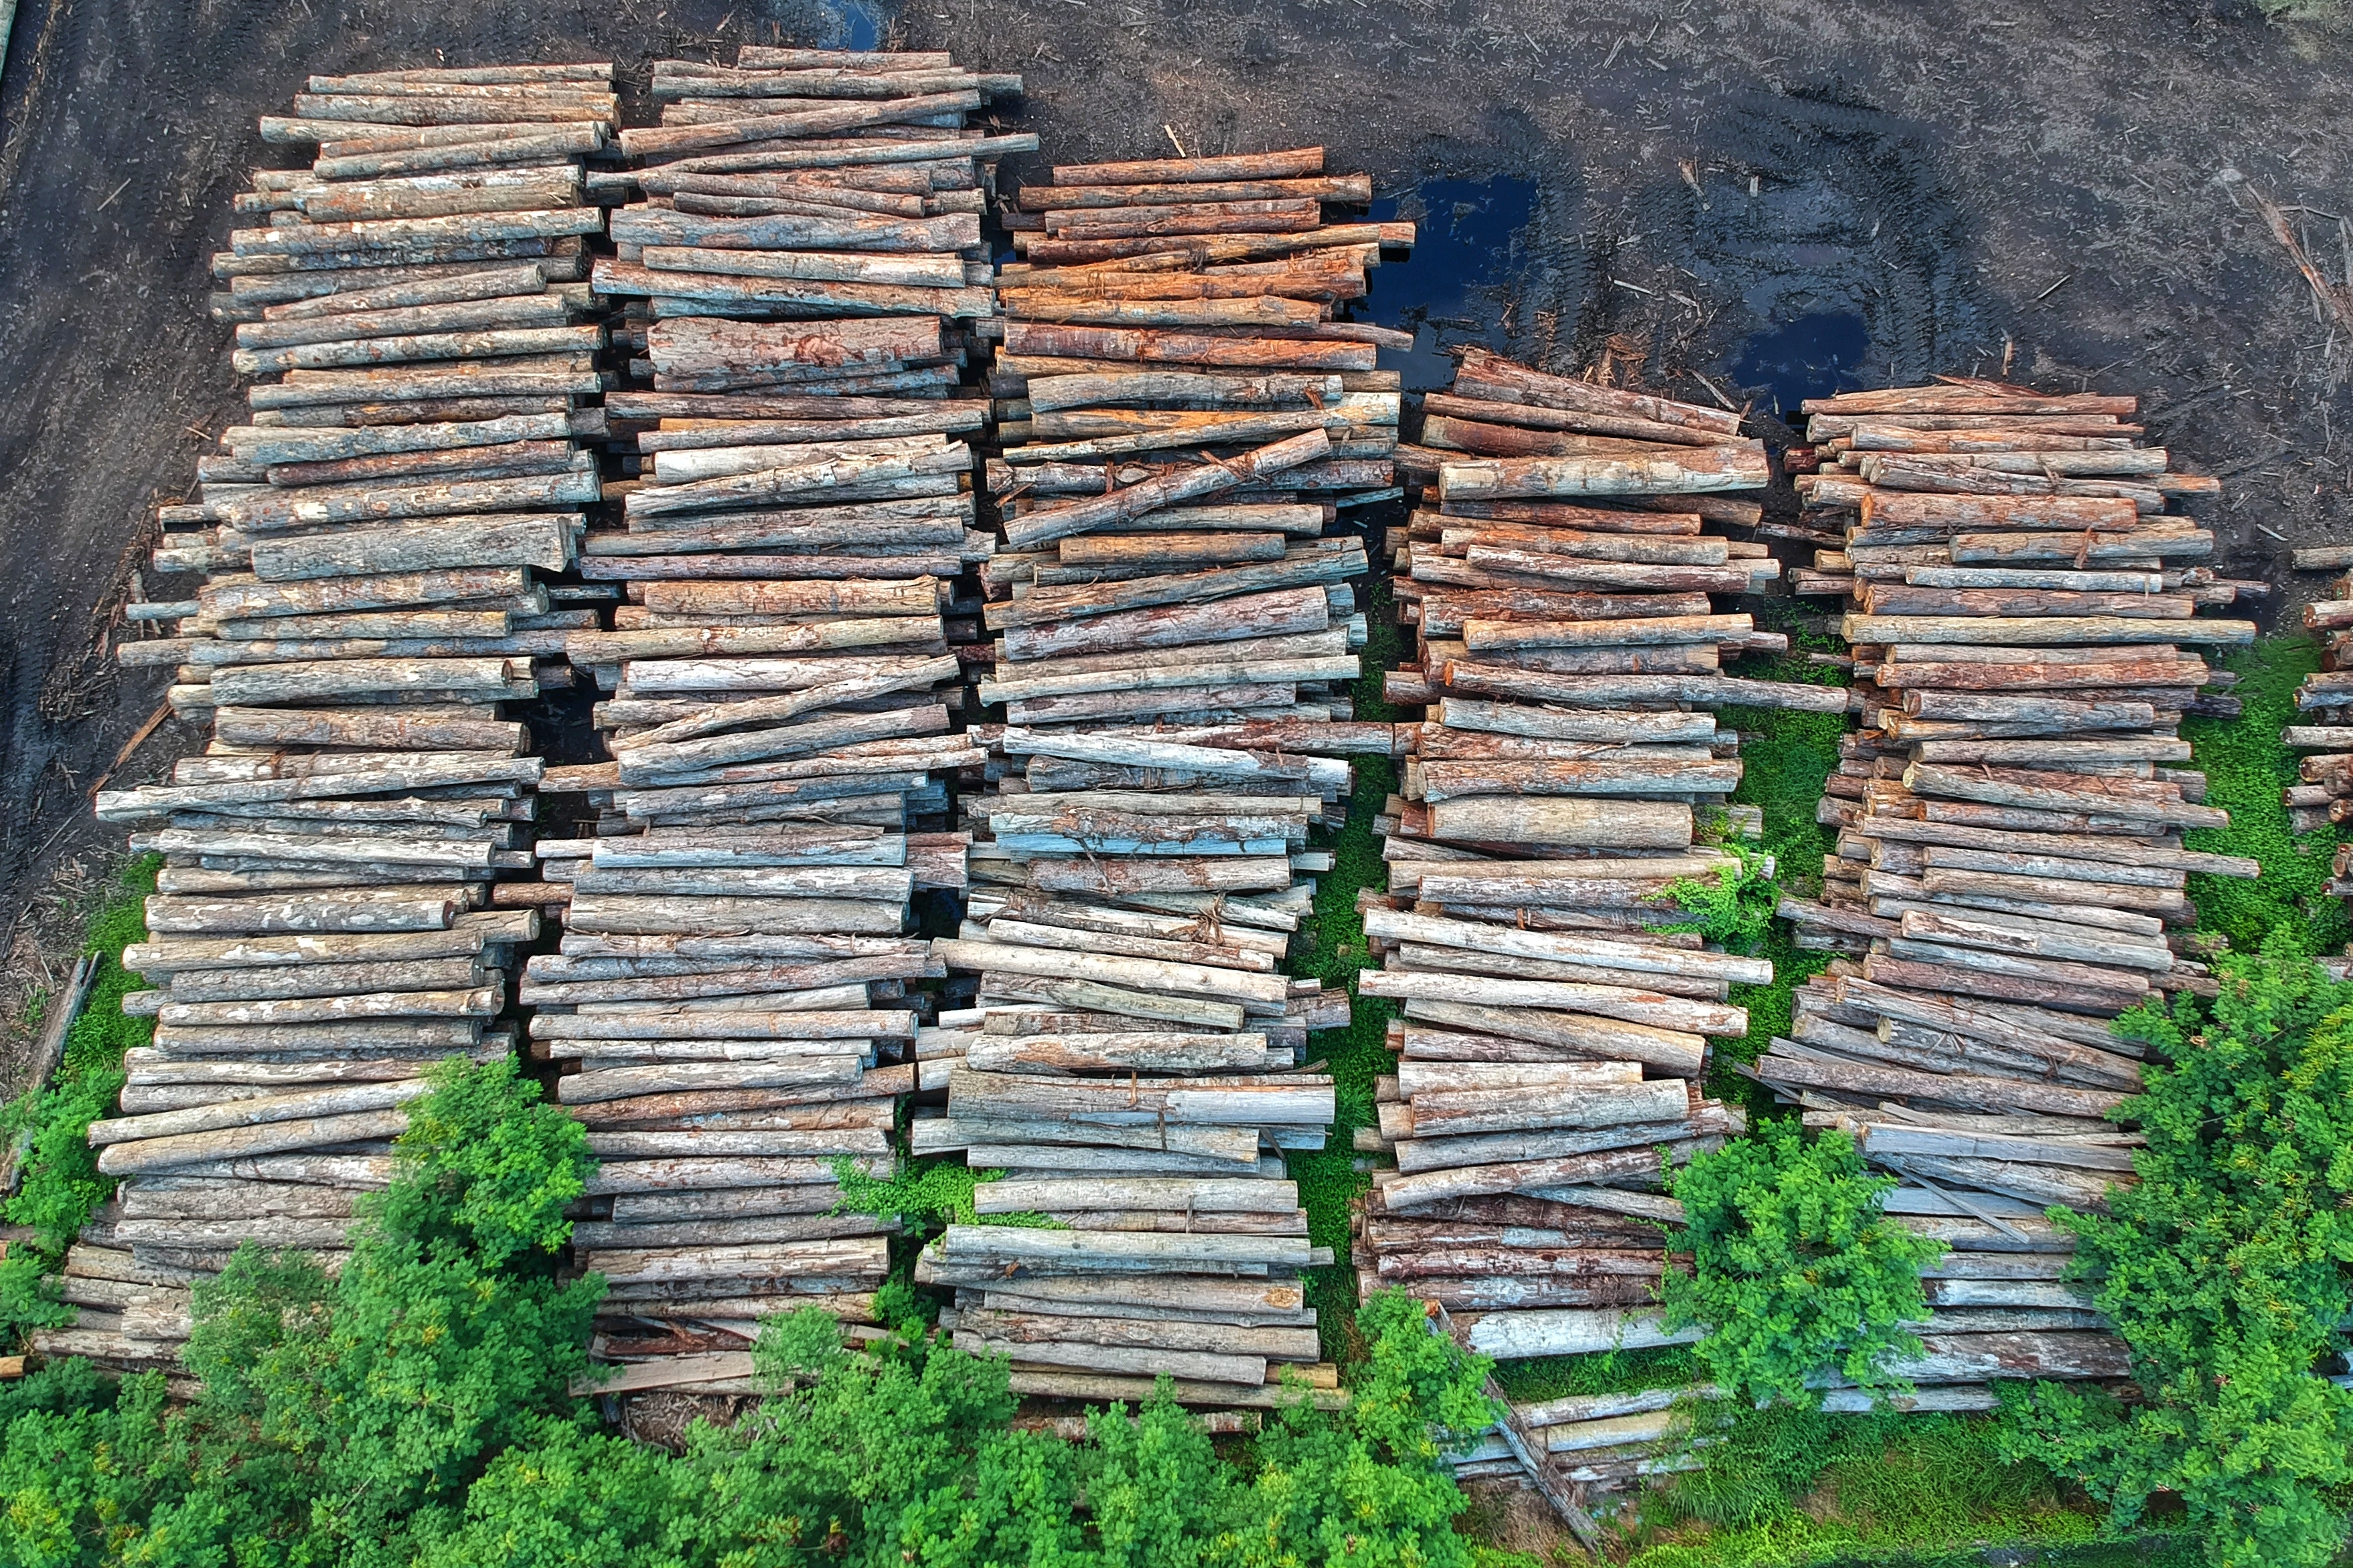 Bird’s eye view of stacked lumber